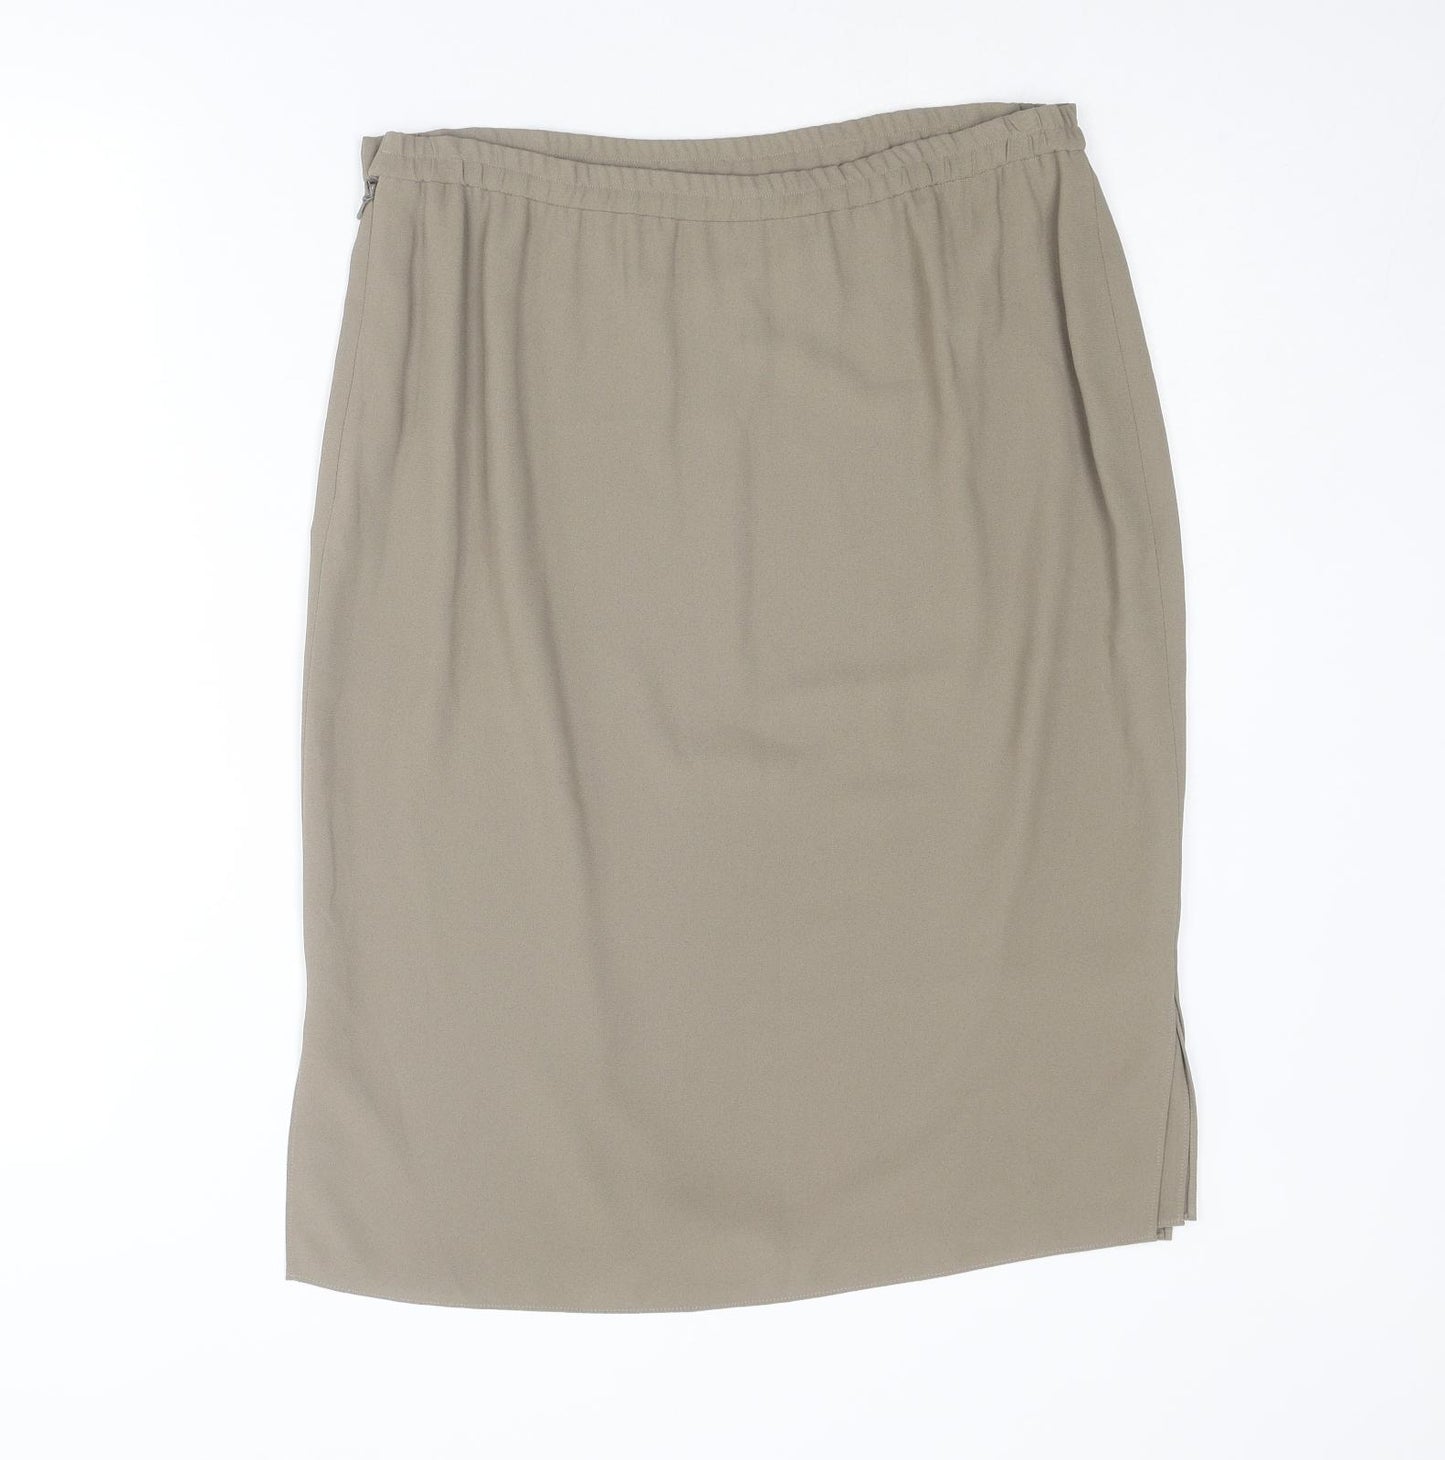 Frank Usher Womens Green Polyester A-Line Skirt Size 14 Zip